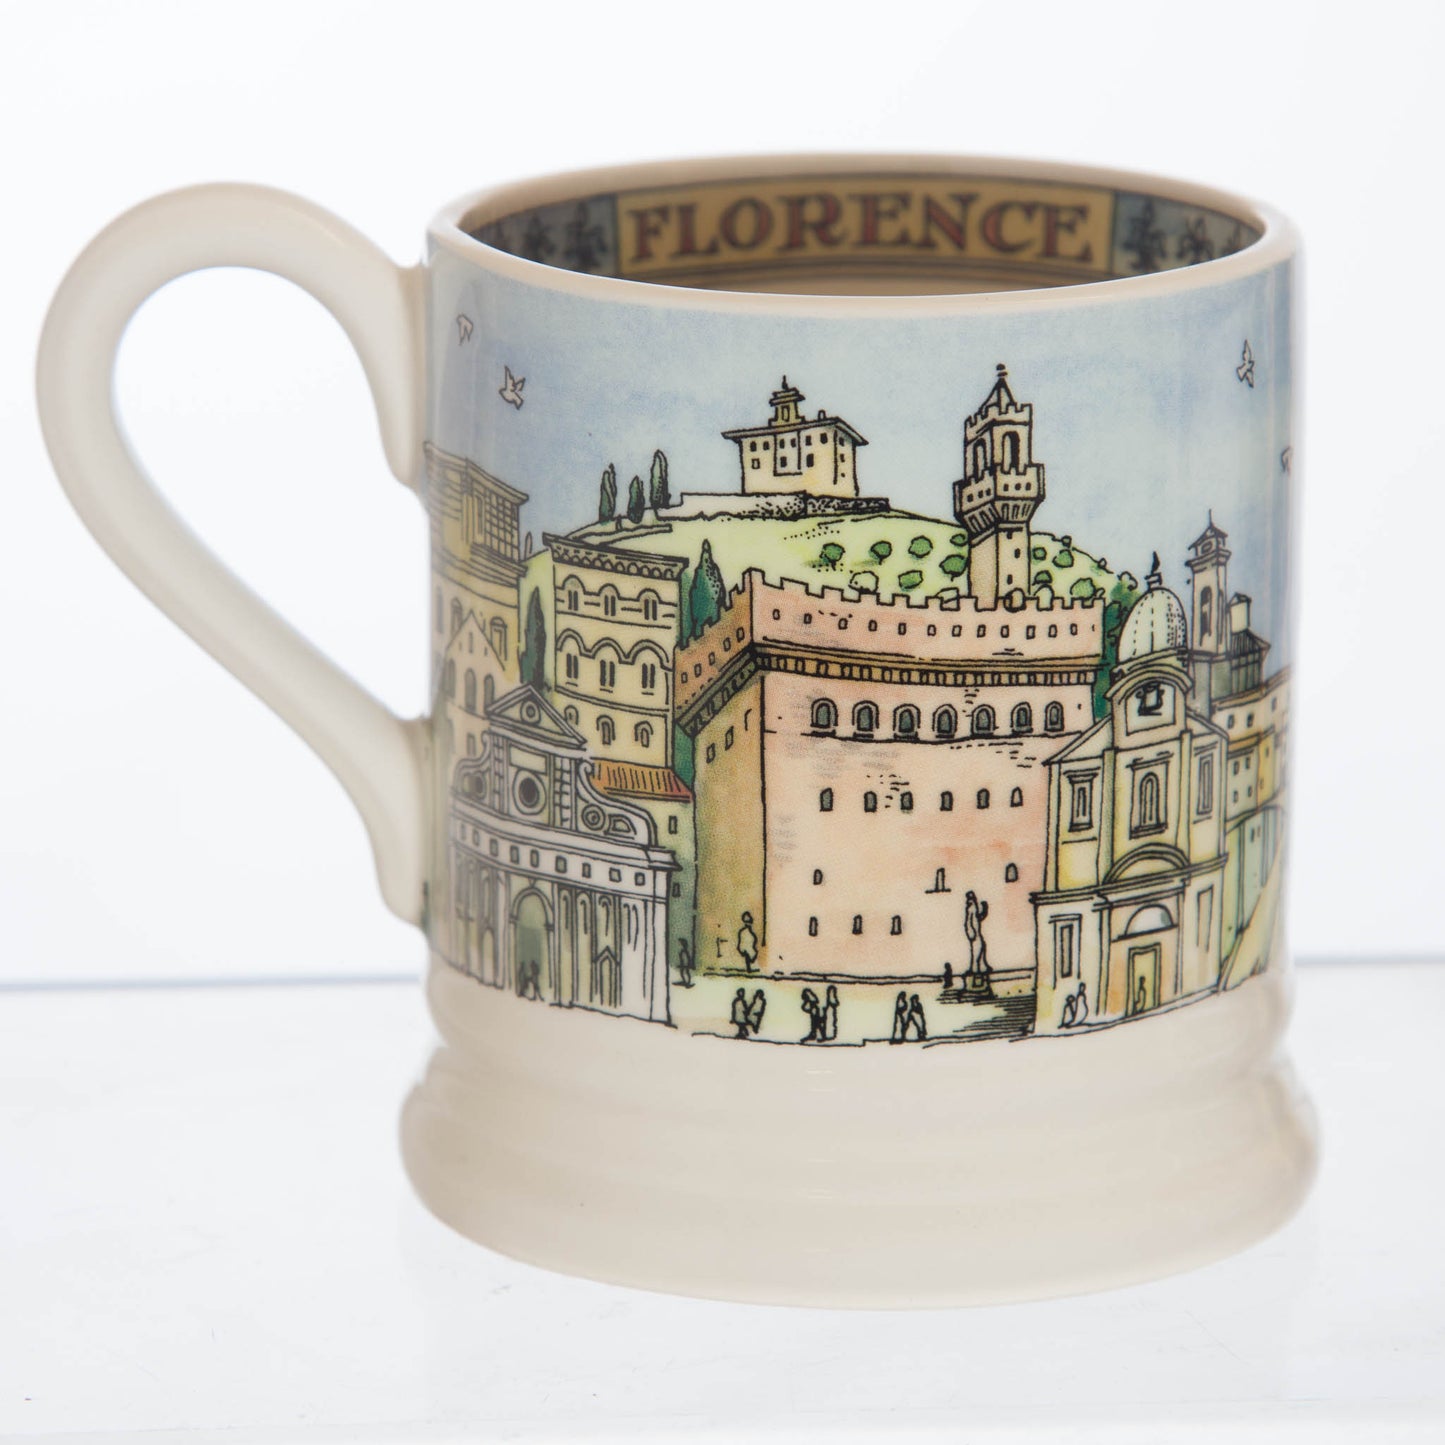 Florence half pint mug from Emma Bridgewater